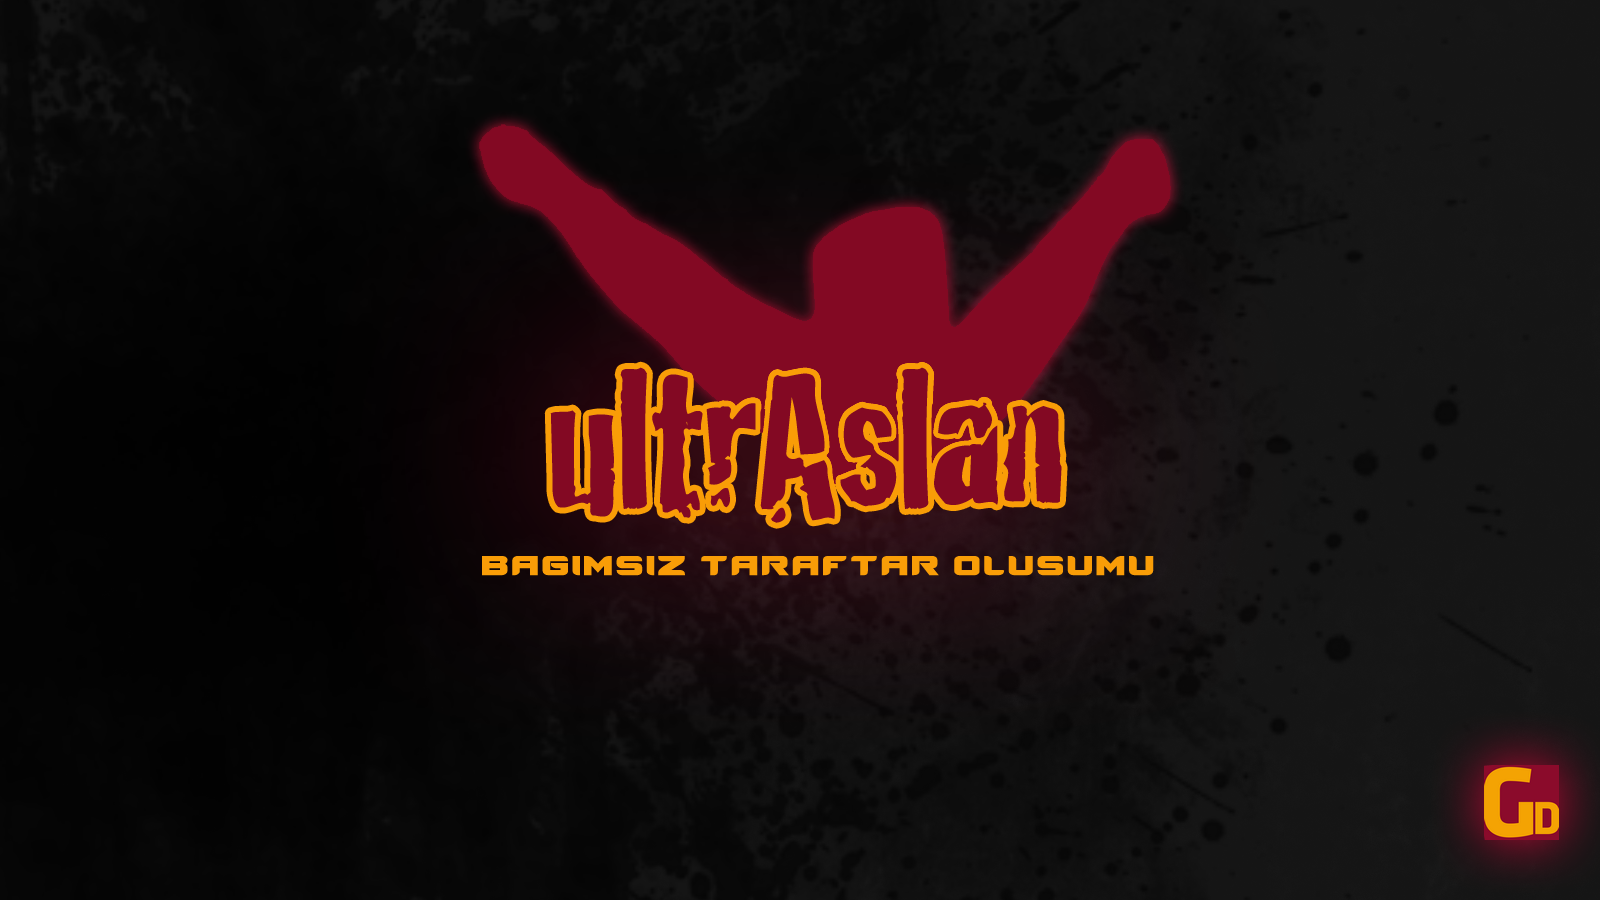 Ultraslan Wallpaper - Poster , HD Wallpaper & Backgrounds